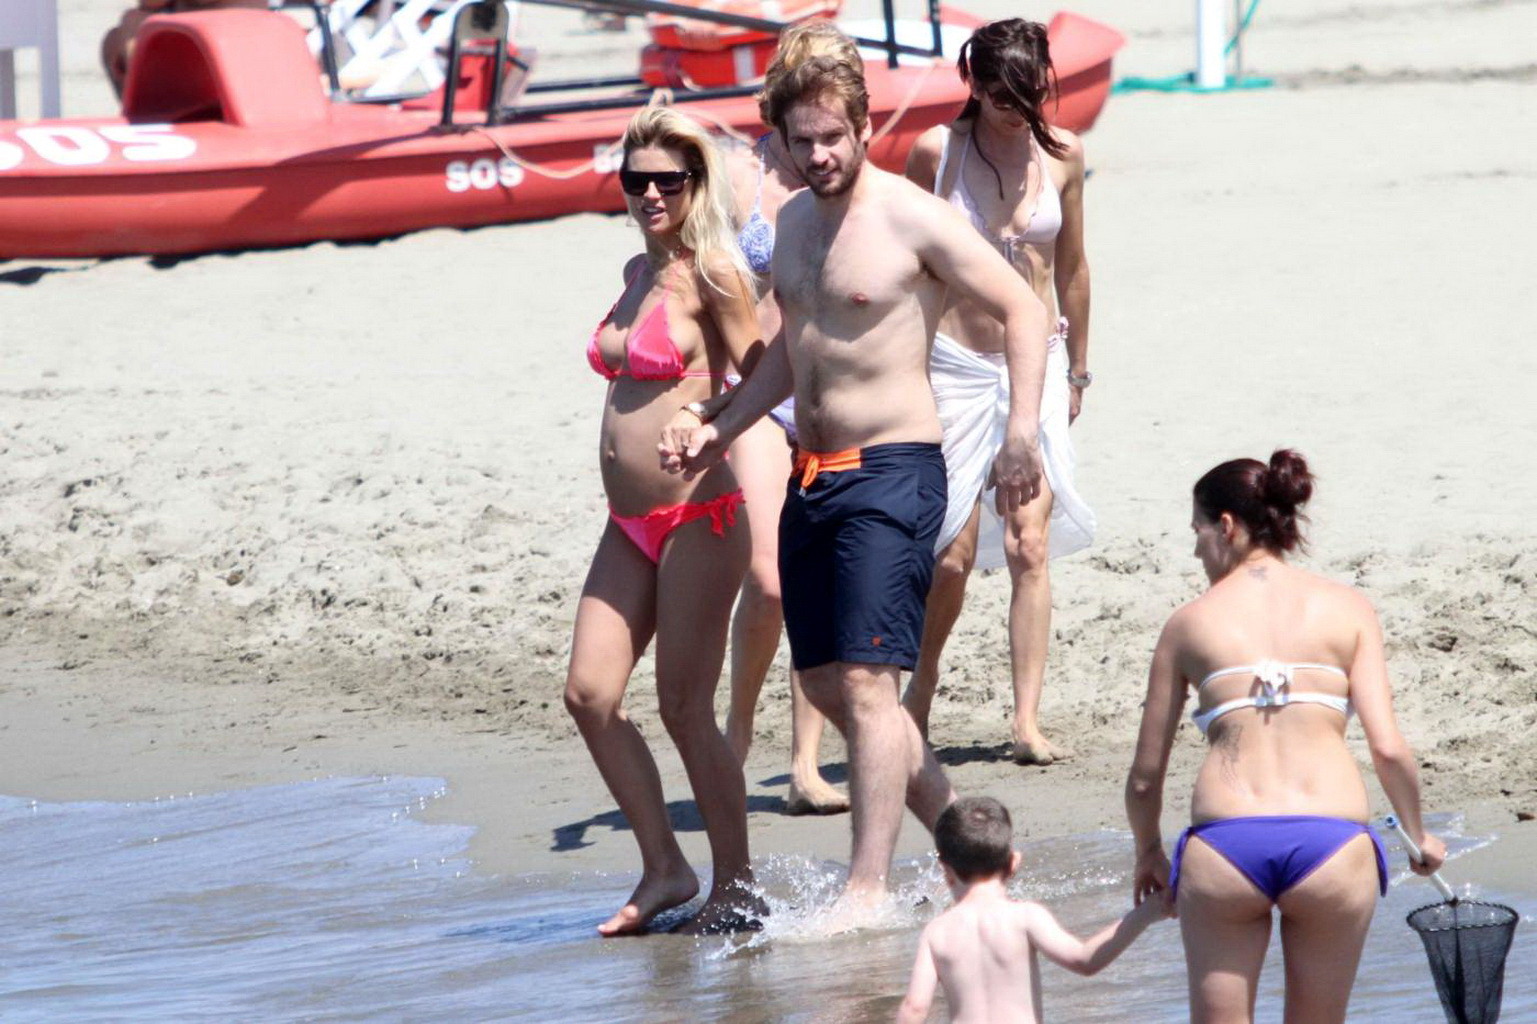 Michelle hunziker schwanger im bikini am strand in forte dei marmi, ita
 #75227832